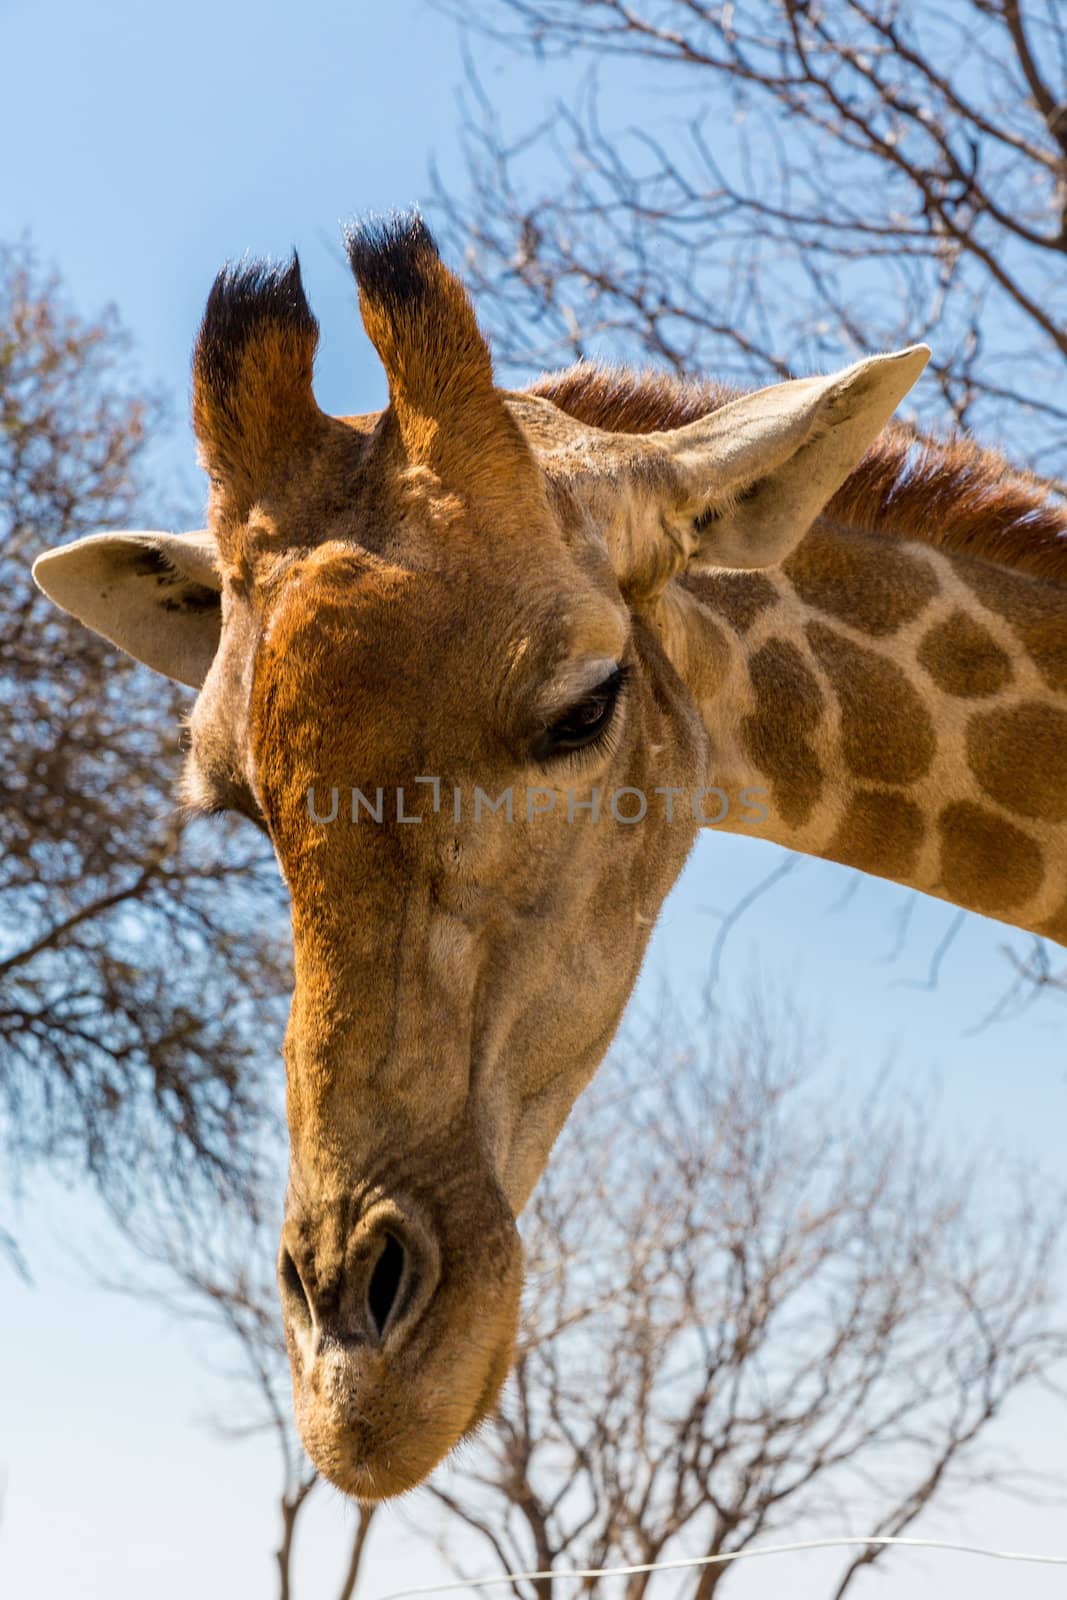 Portrait of a giraffe by derejeb